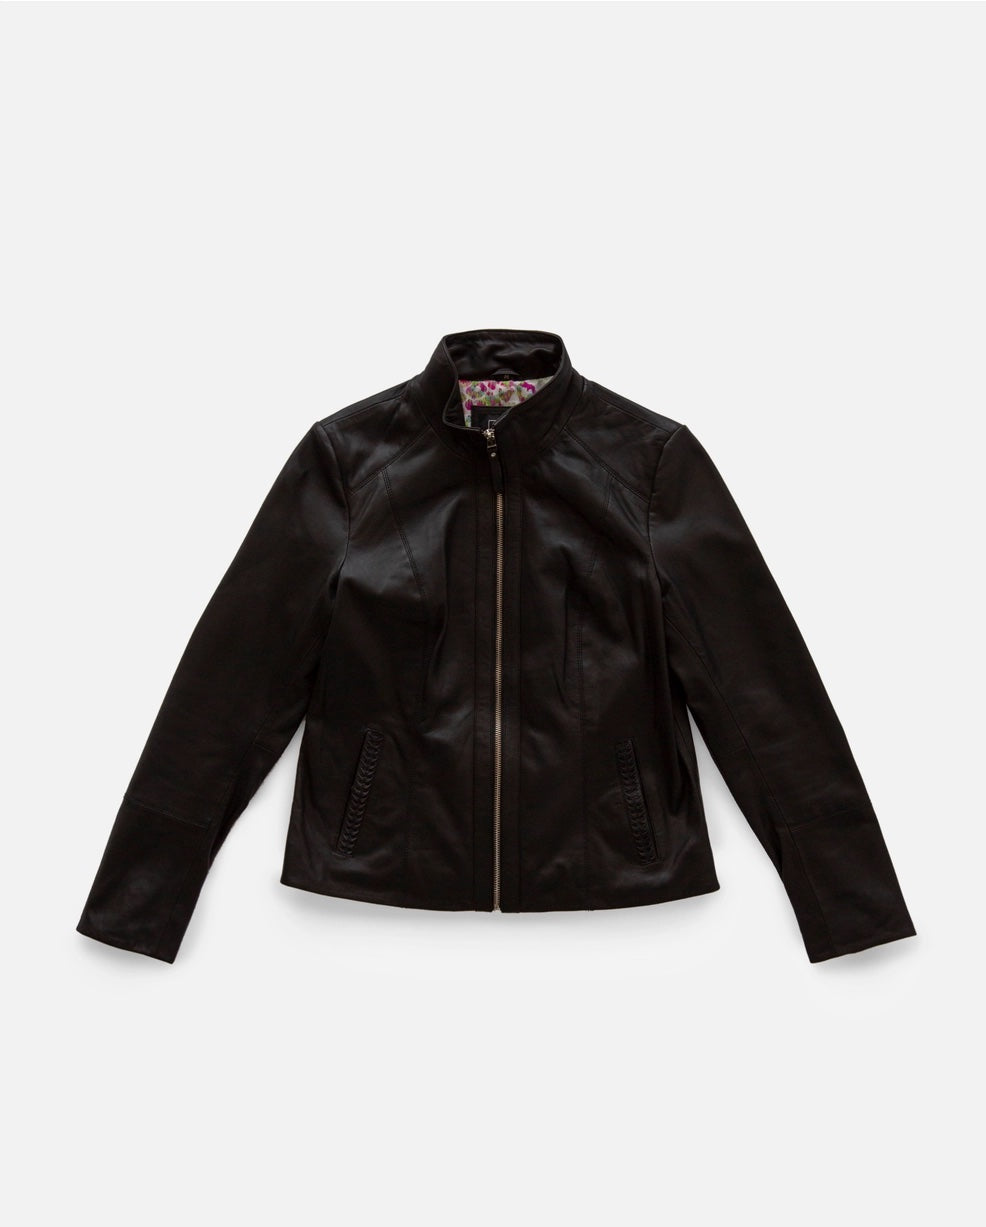 Amsterdam Heritage Urban Leather Jacket in Black